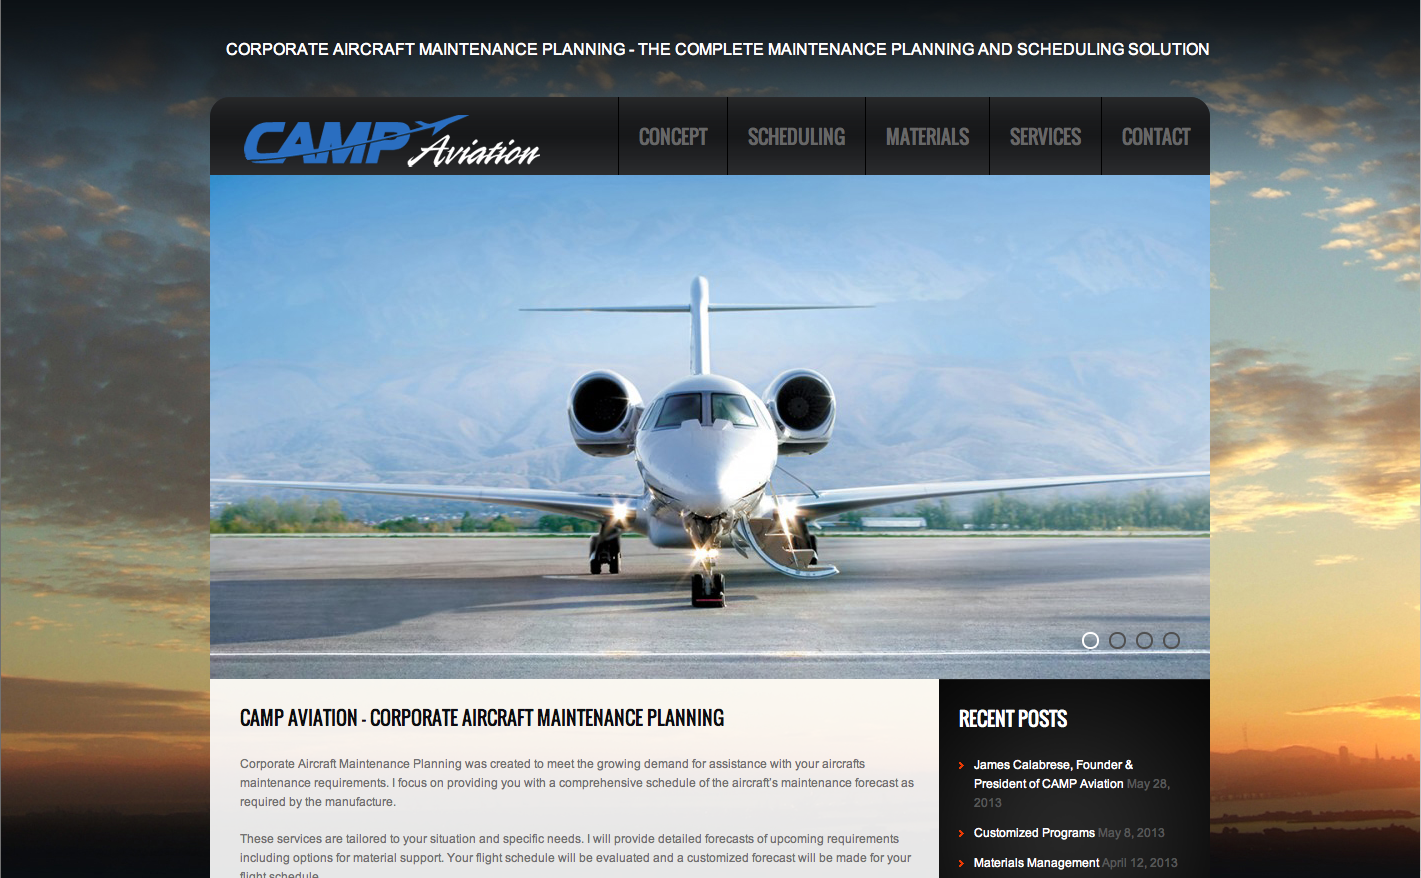 CAMP Aviation